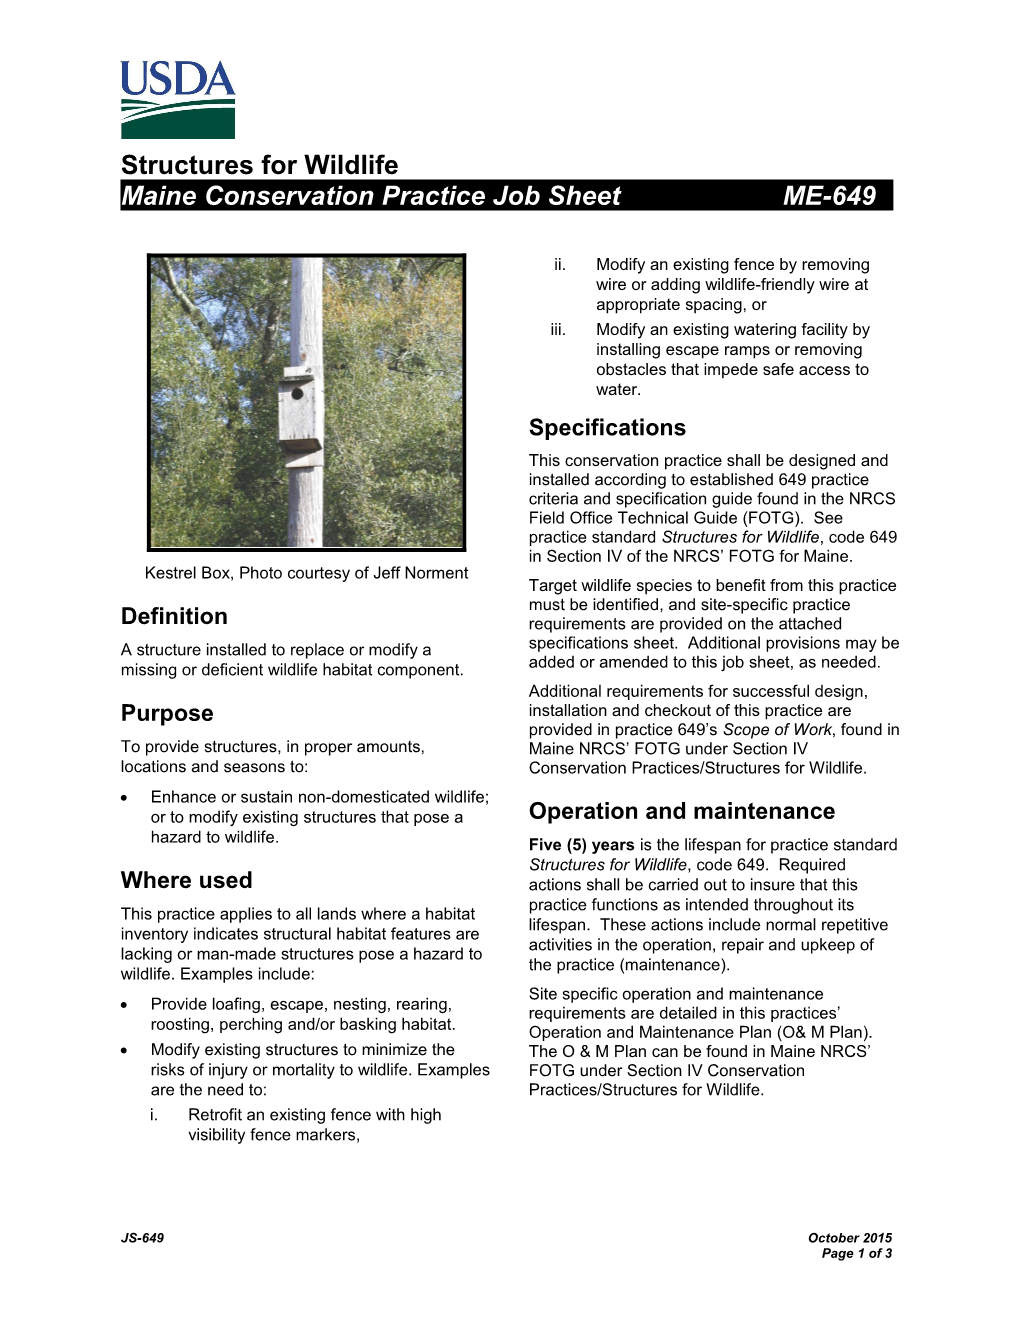 Maineconservation Practice Job Sheet ME-649